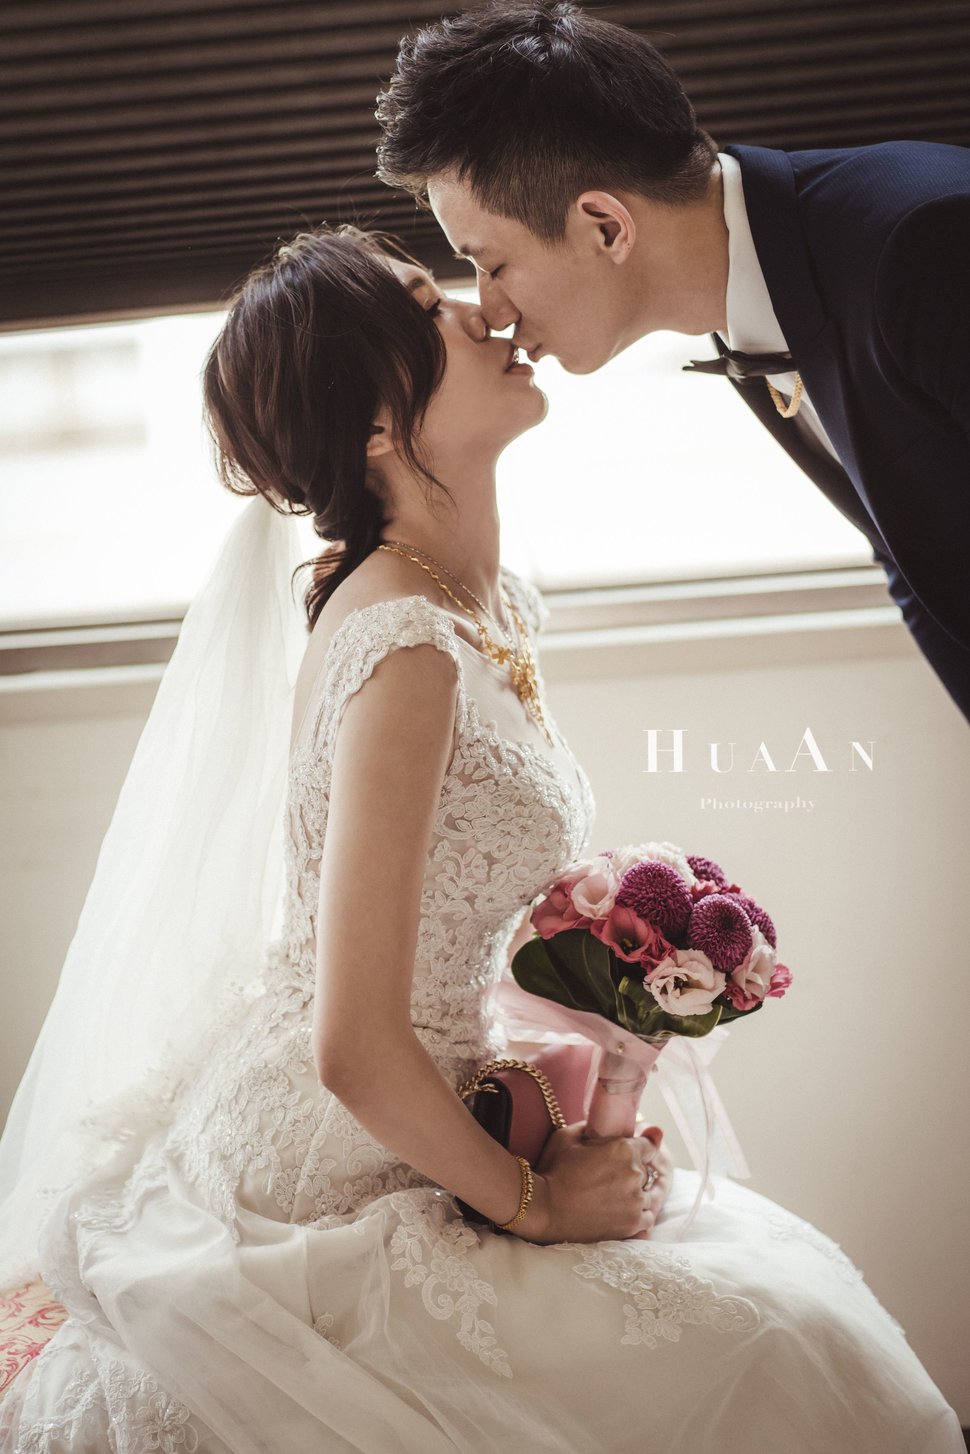 婚禮攝影 - Huaan Photography《結婚吧》